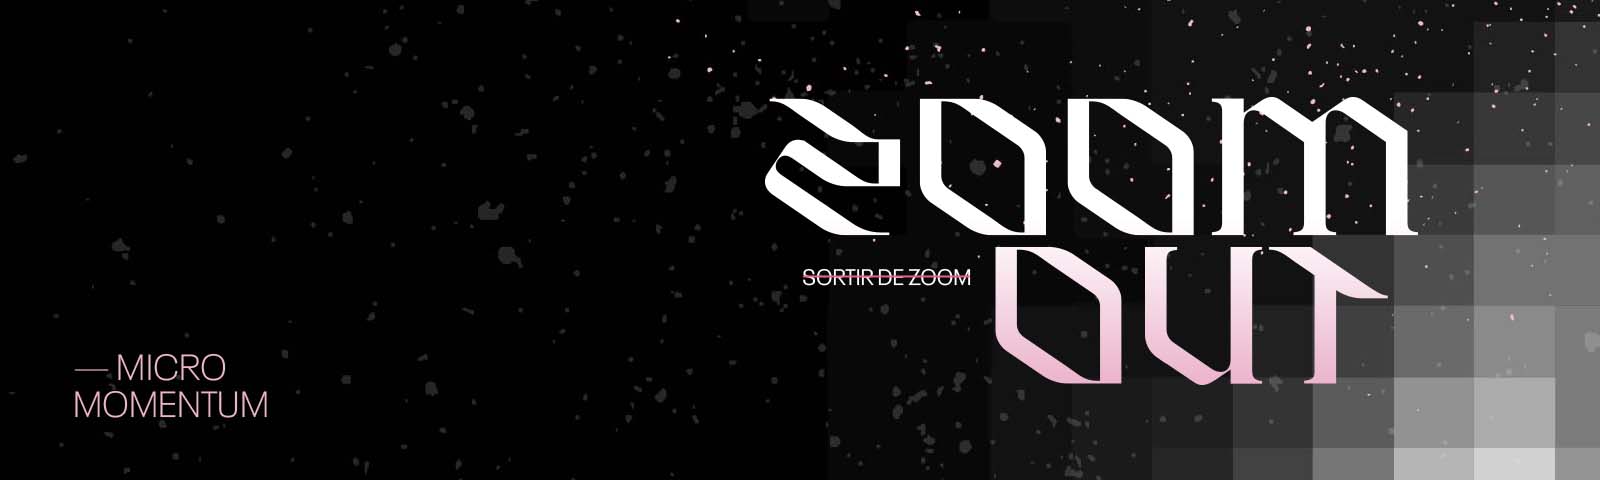 logo du micro-momentum ZOOM OUT/SORTIR DE ZOOM